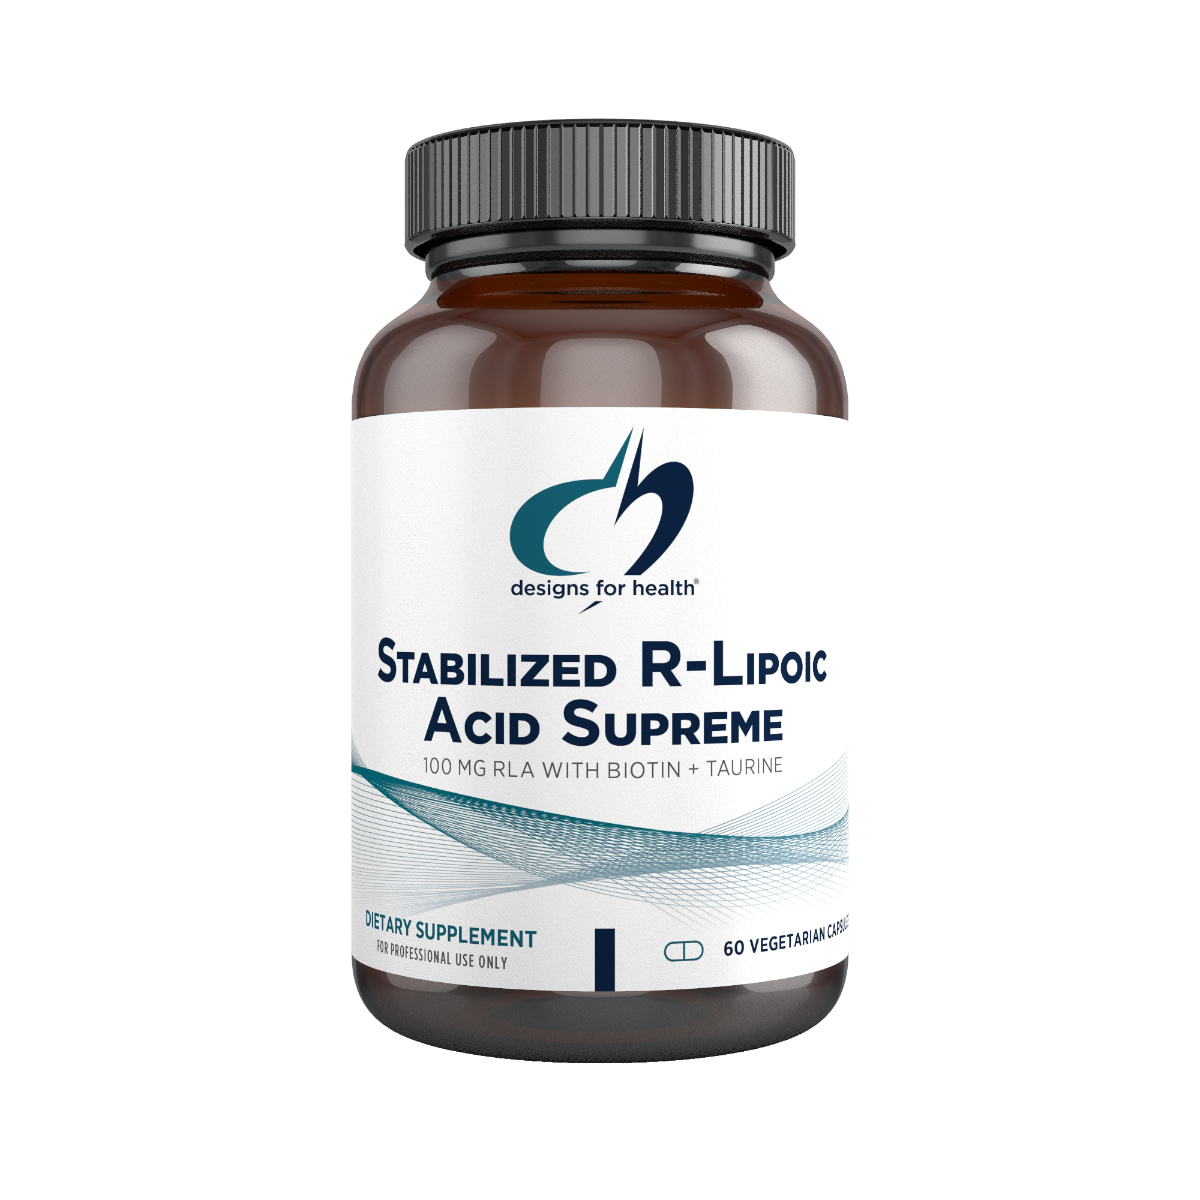 Stabilized R-Lipoic Acid Supreme